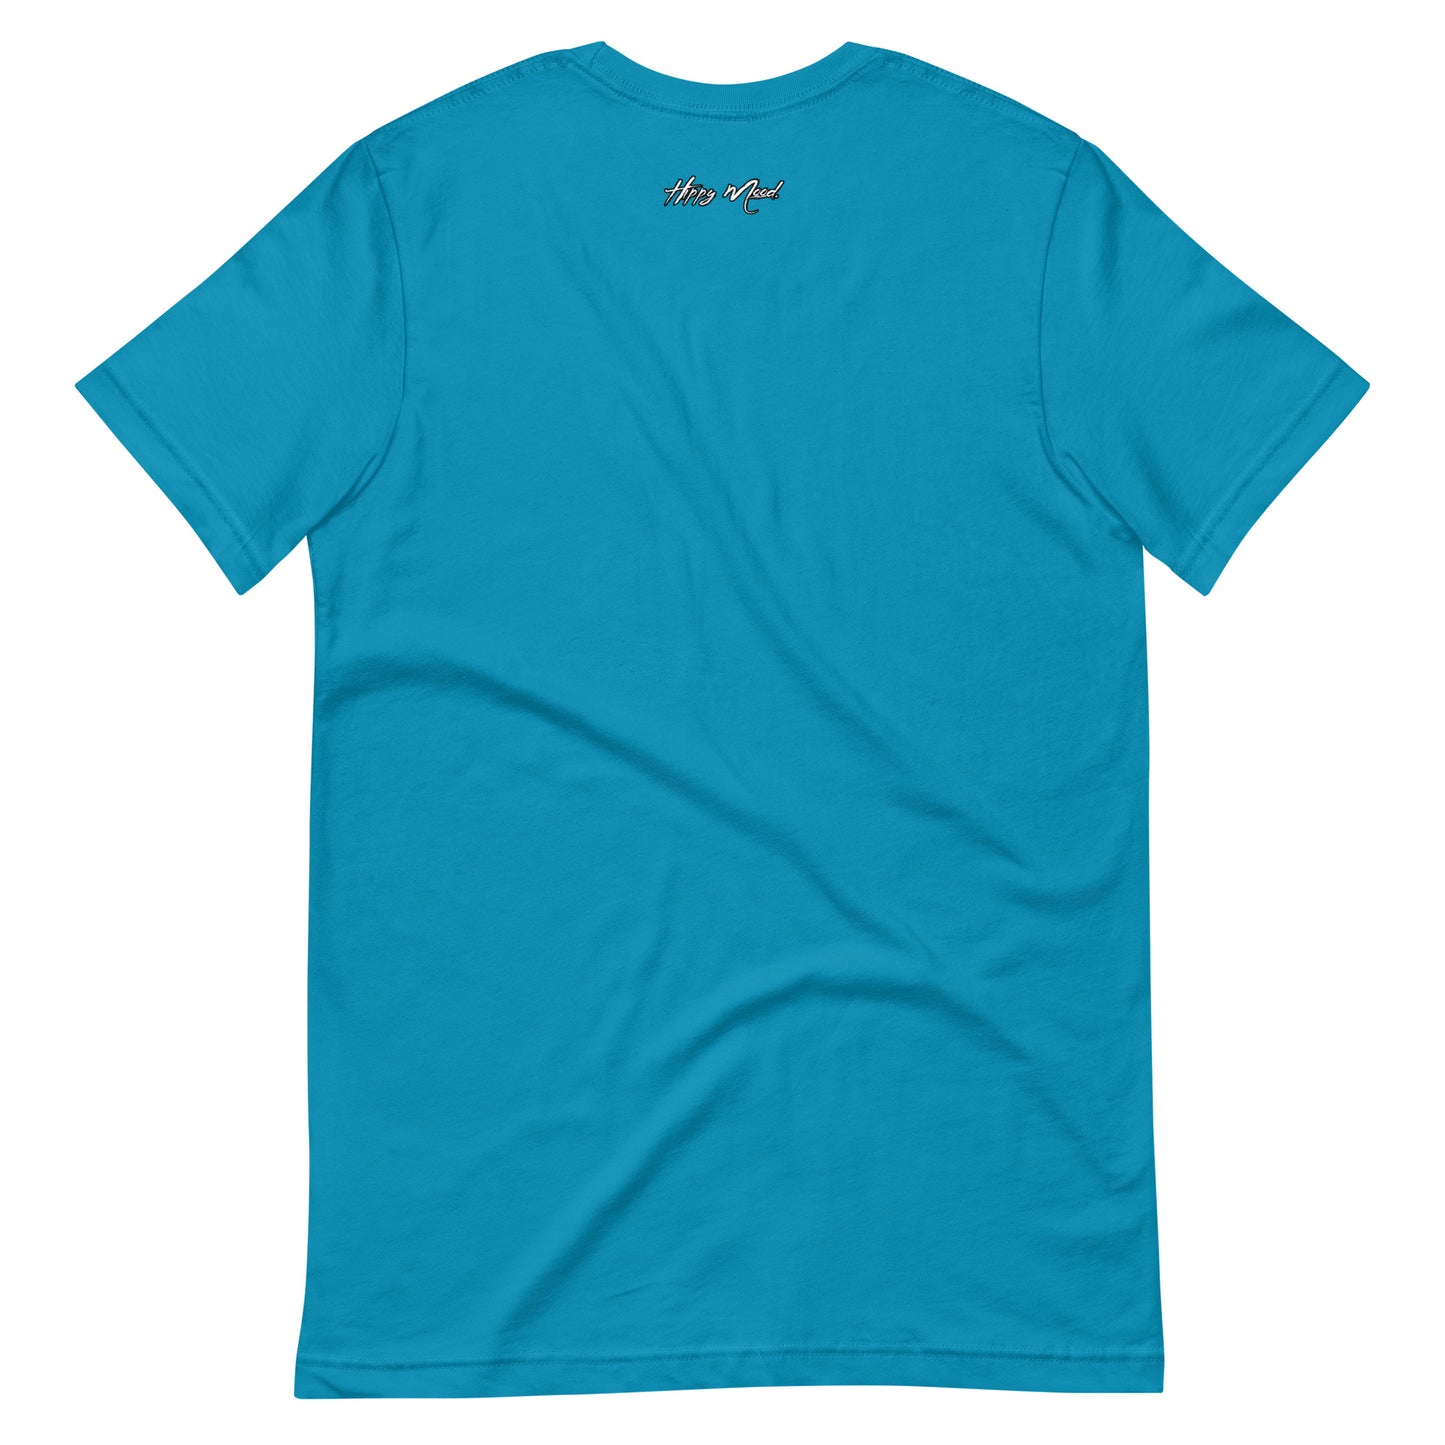 Baddie Print | Unisex t-shirt